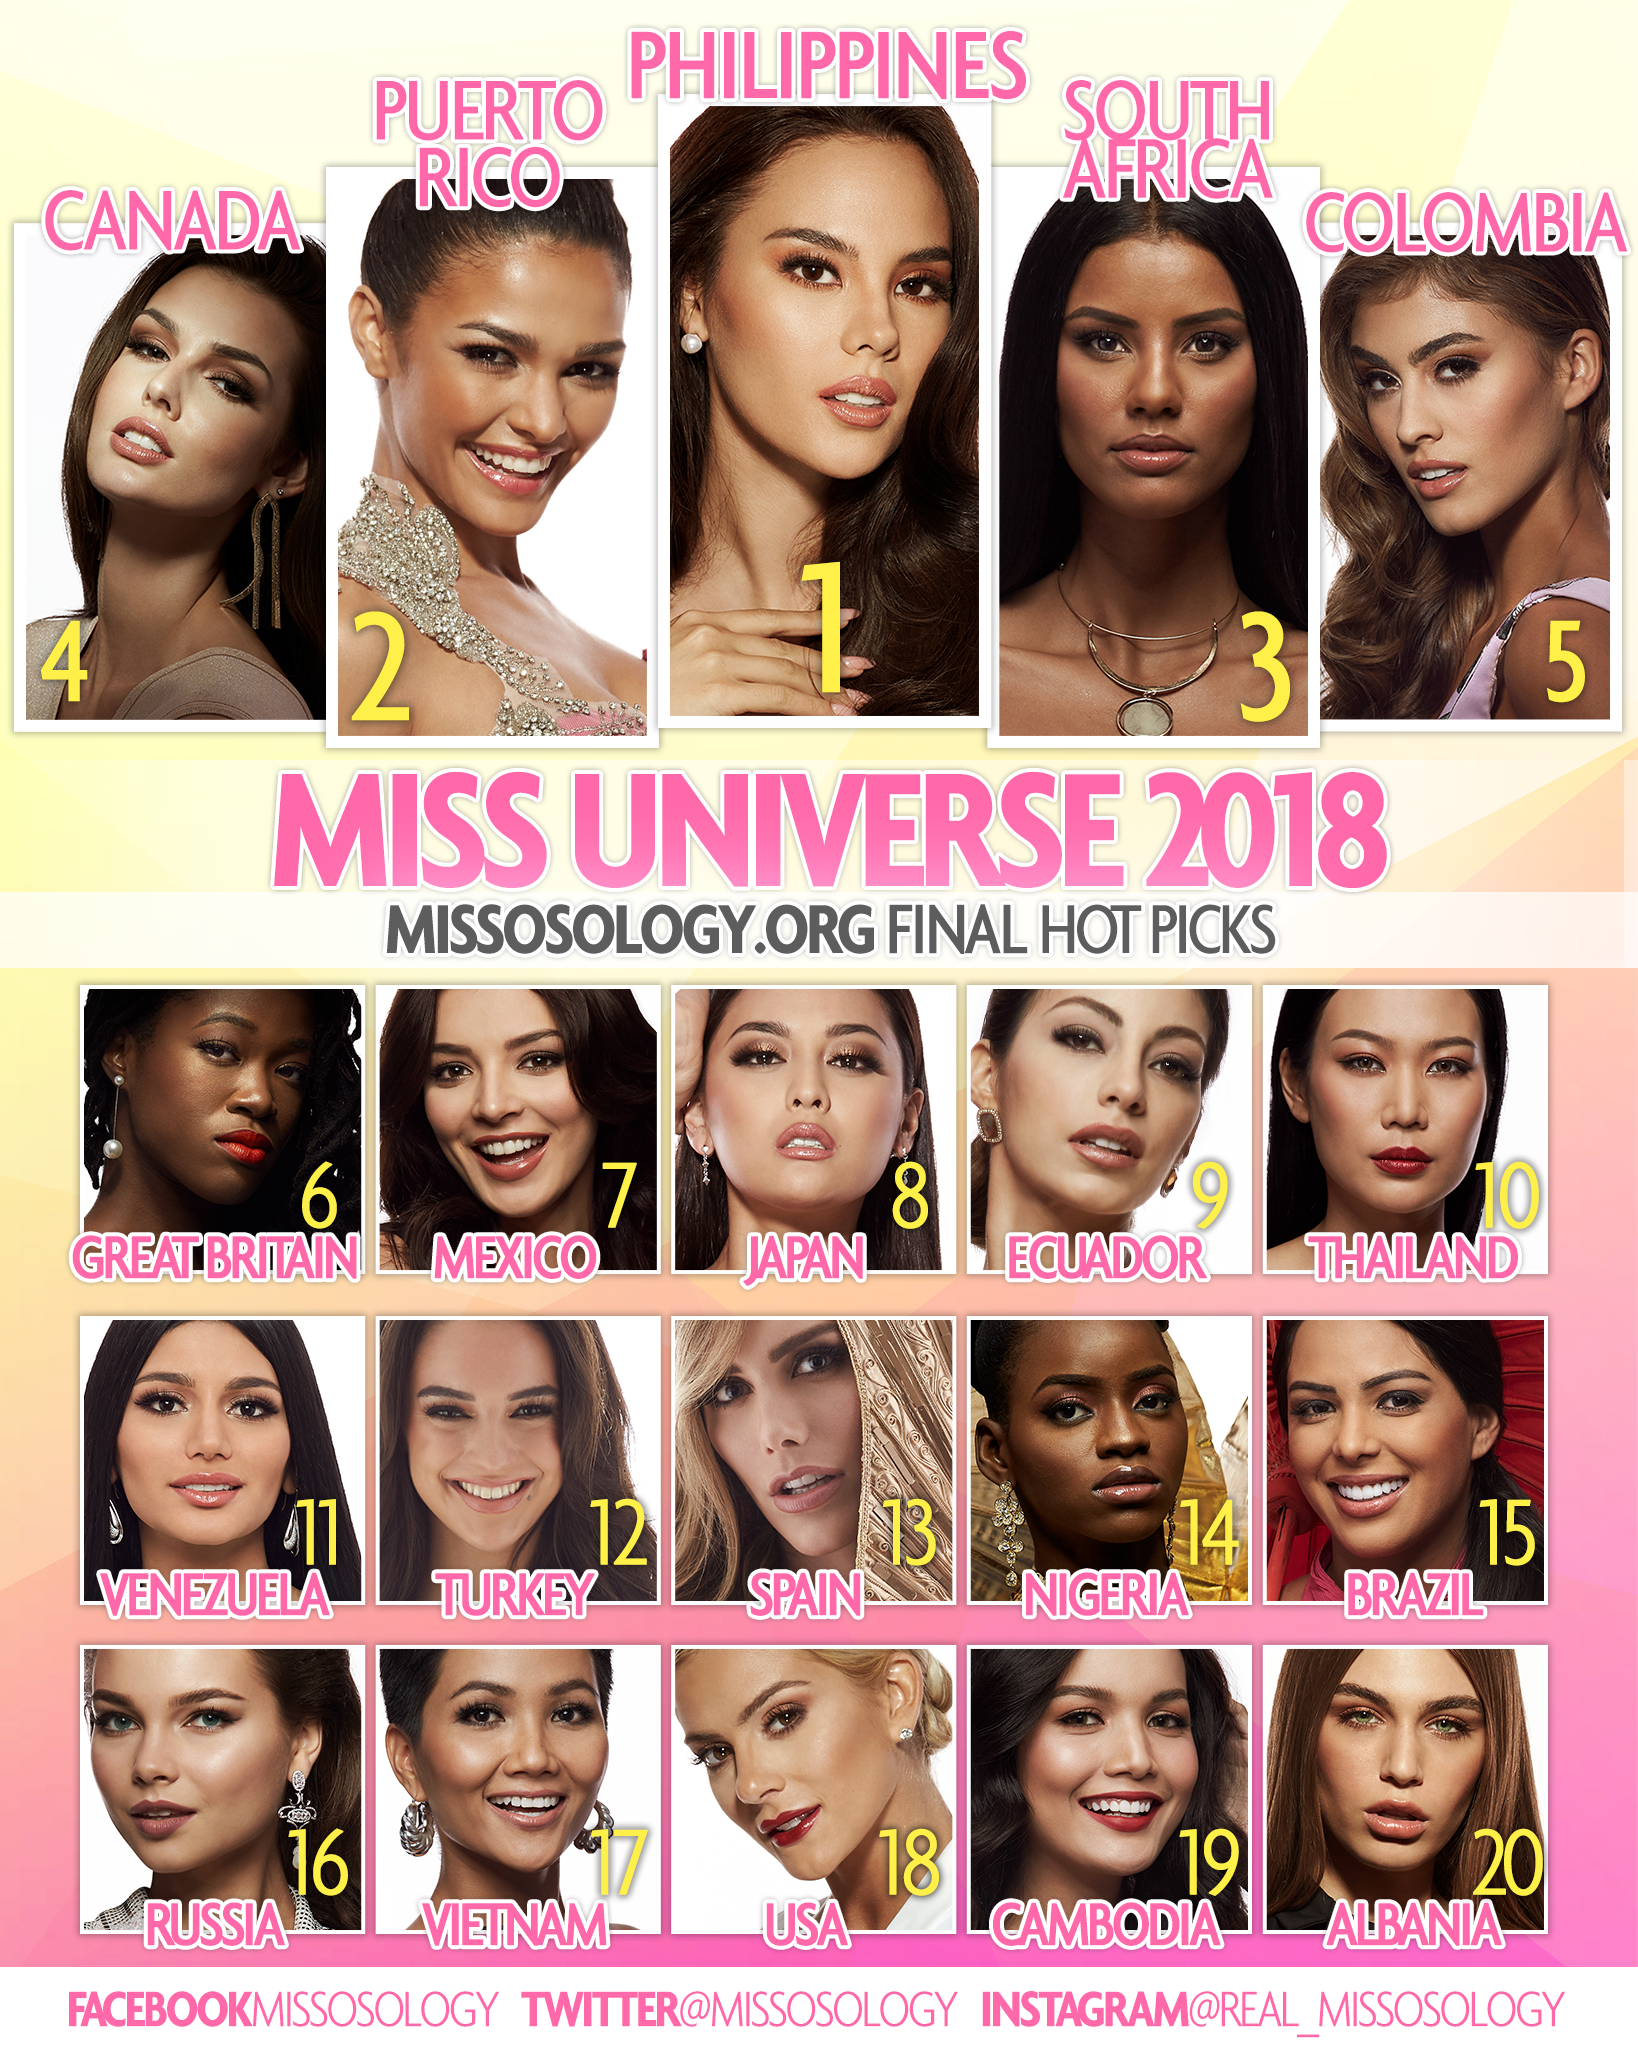 ultimo hot picks de missosology para miss universe 2018. 7fhrggv5